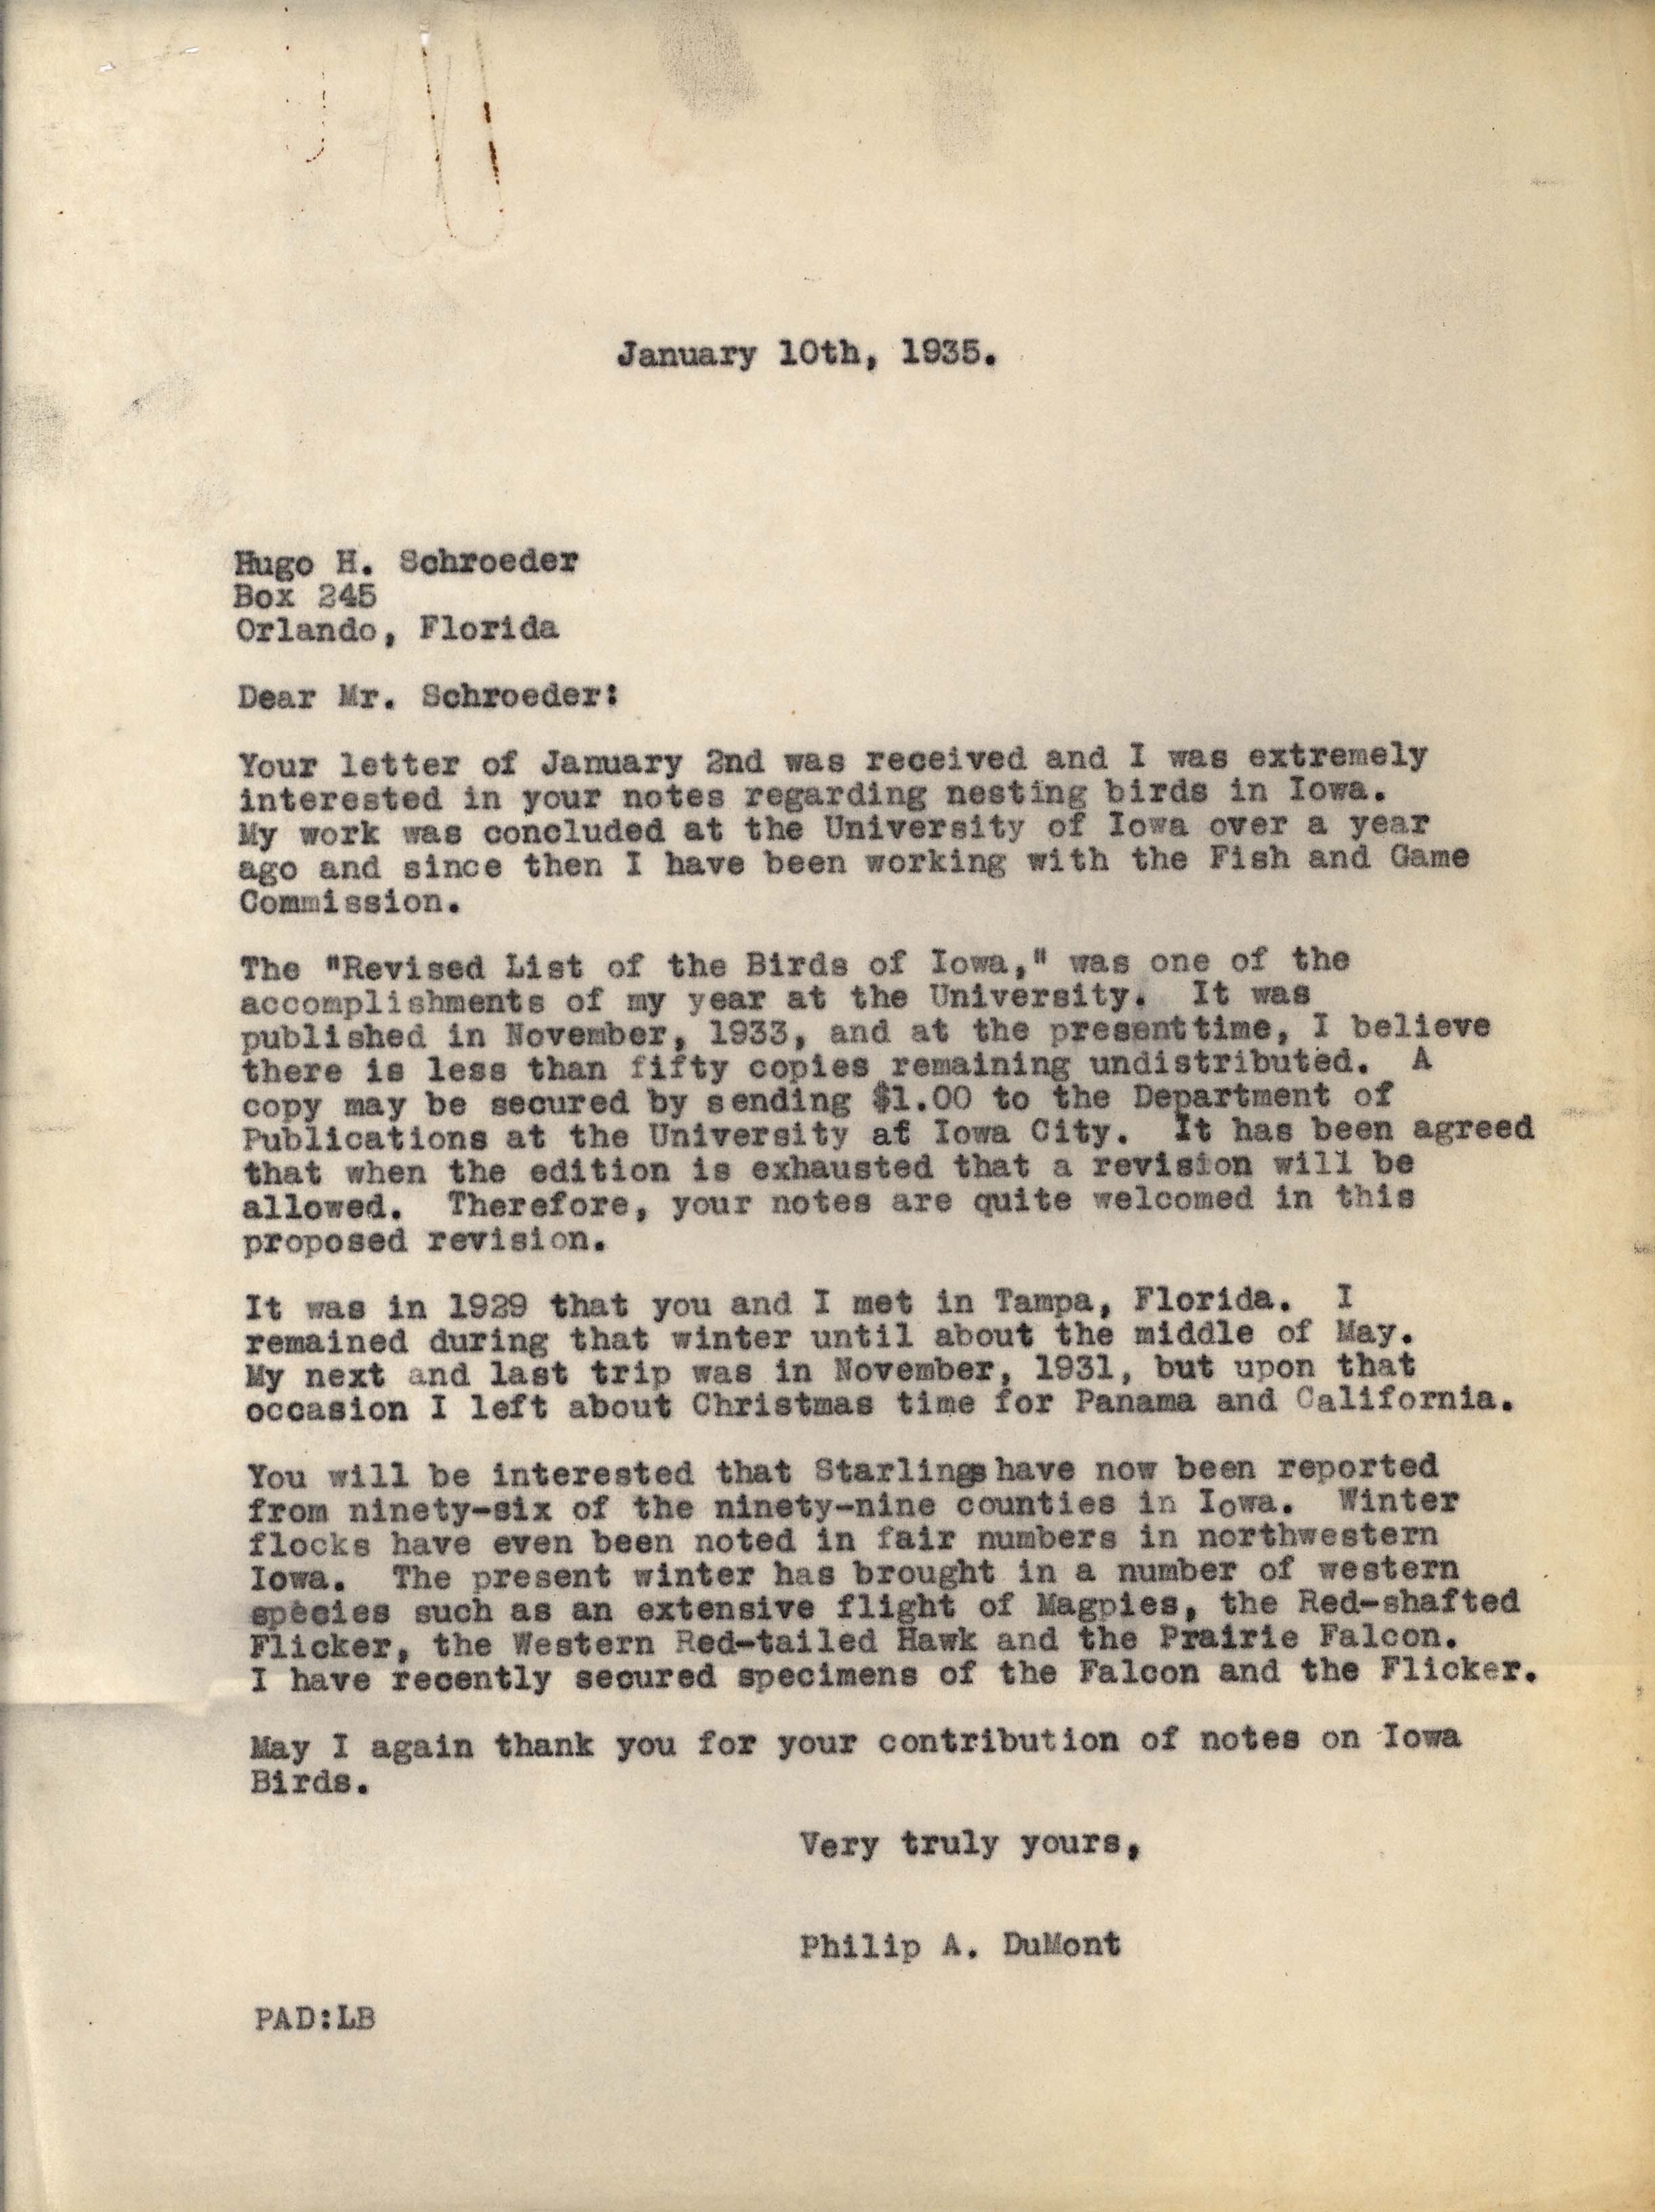 Philip DuMont letter to Hugo Schroder regarding nesting birds in Iowa, January 10, 1935